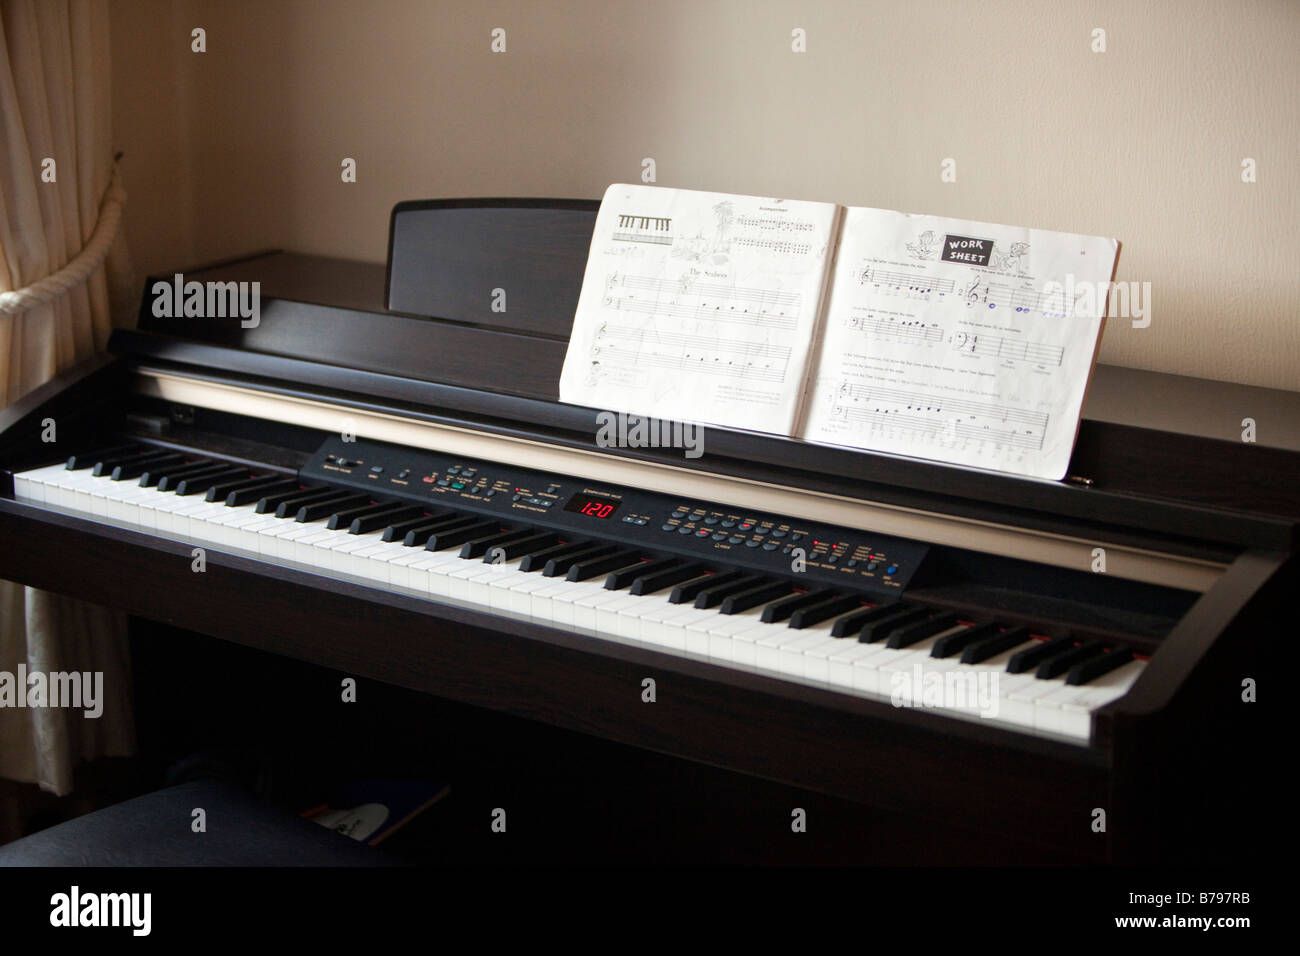 electronic piano keyboard Stock Photo